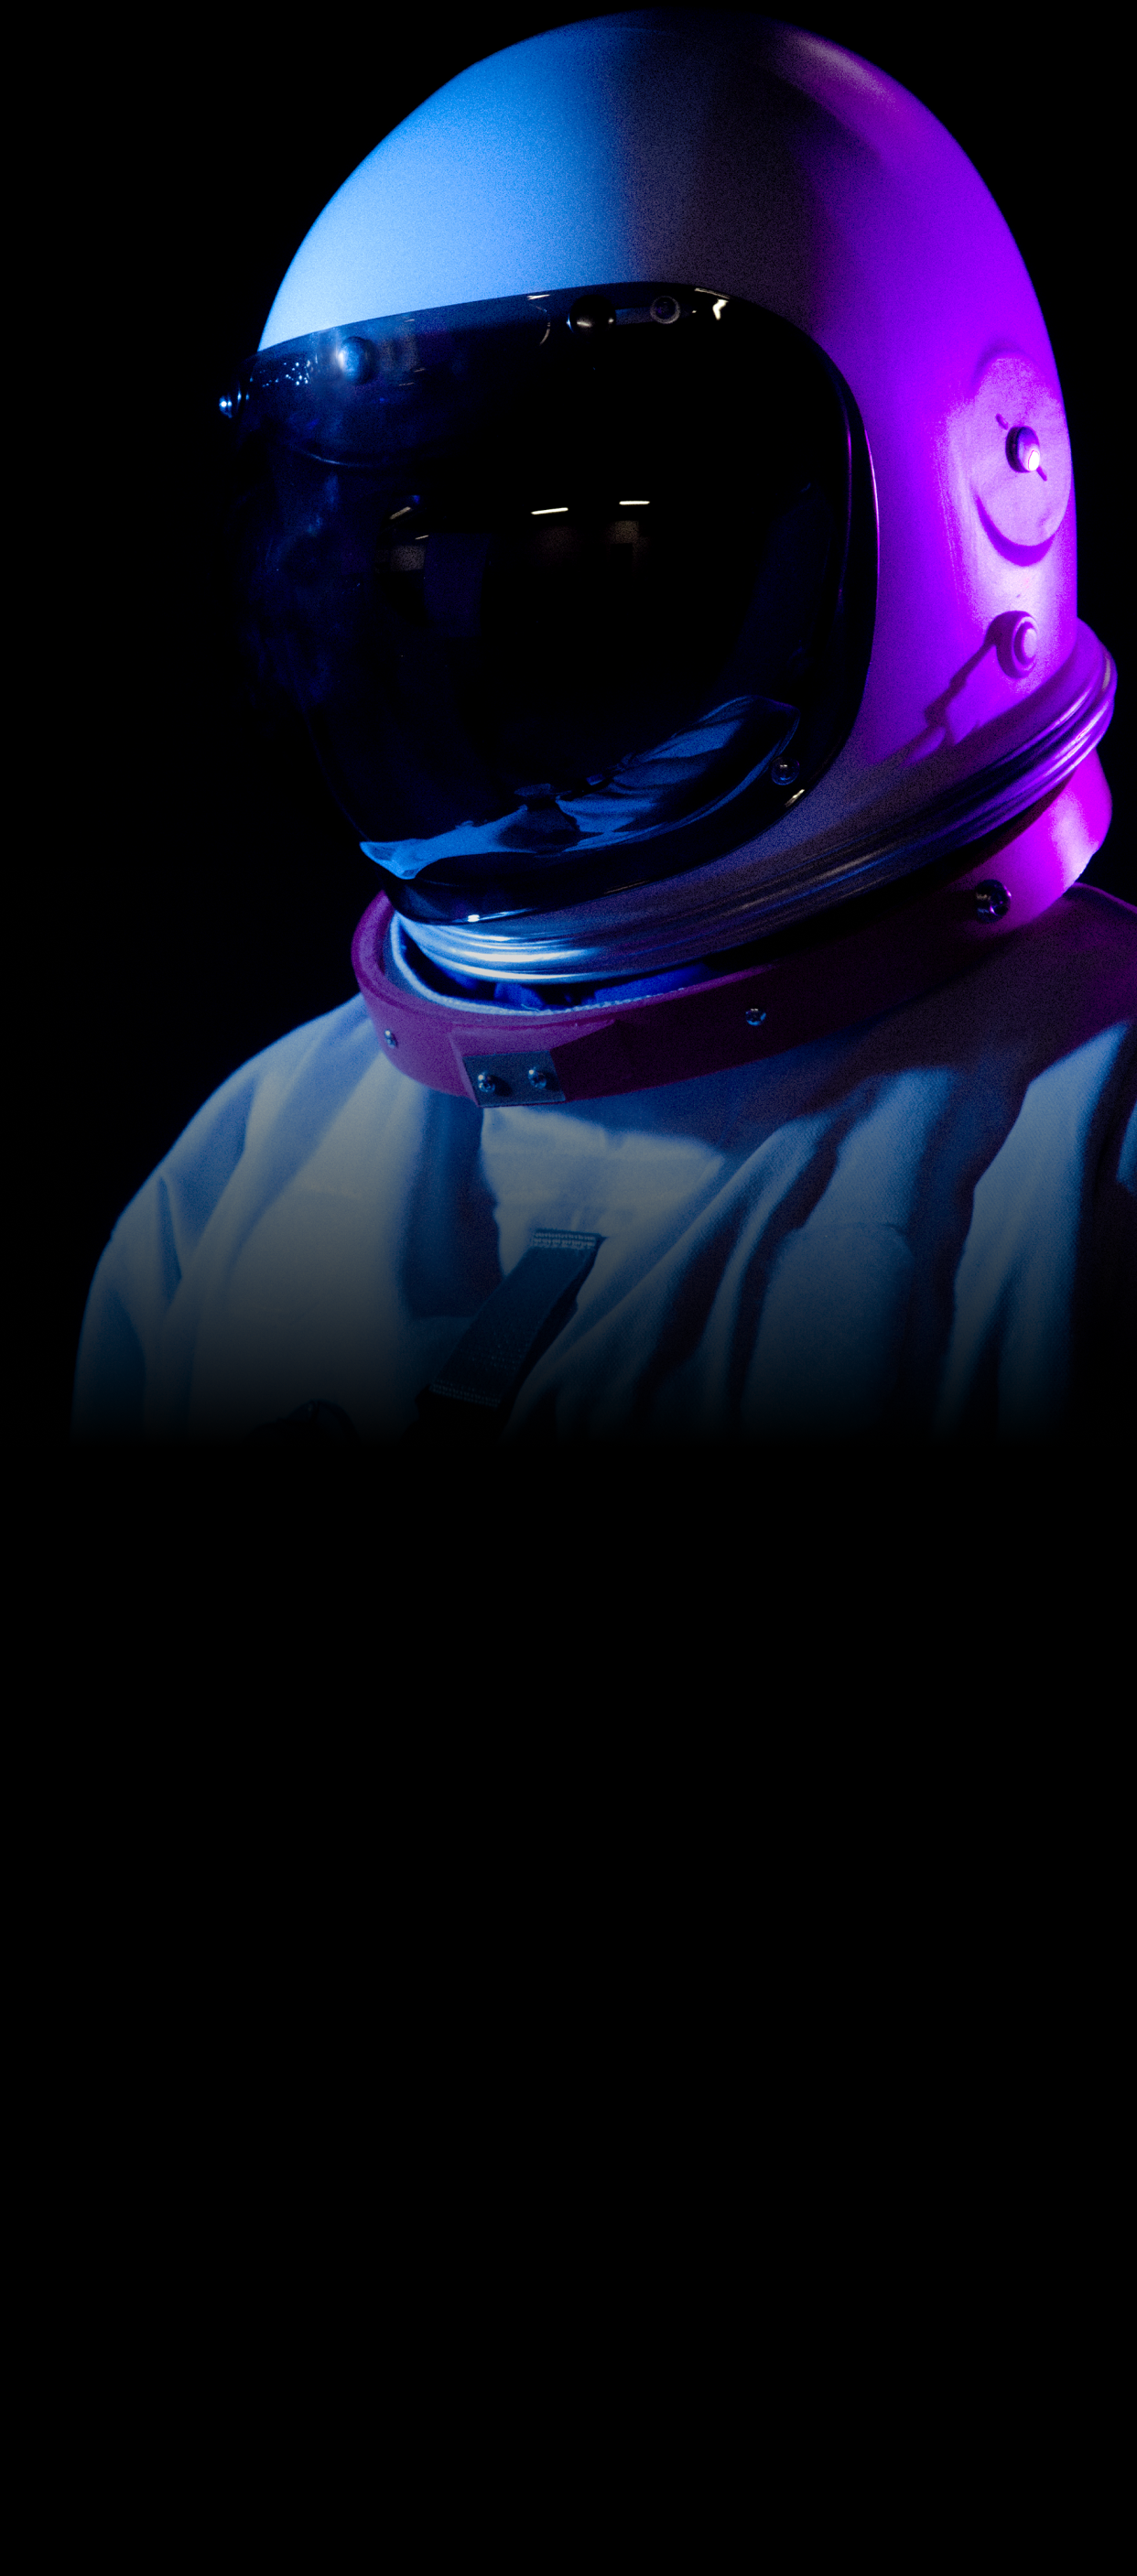 An astronaut's helmet on a black background.